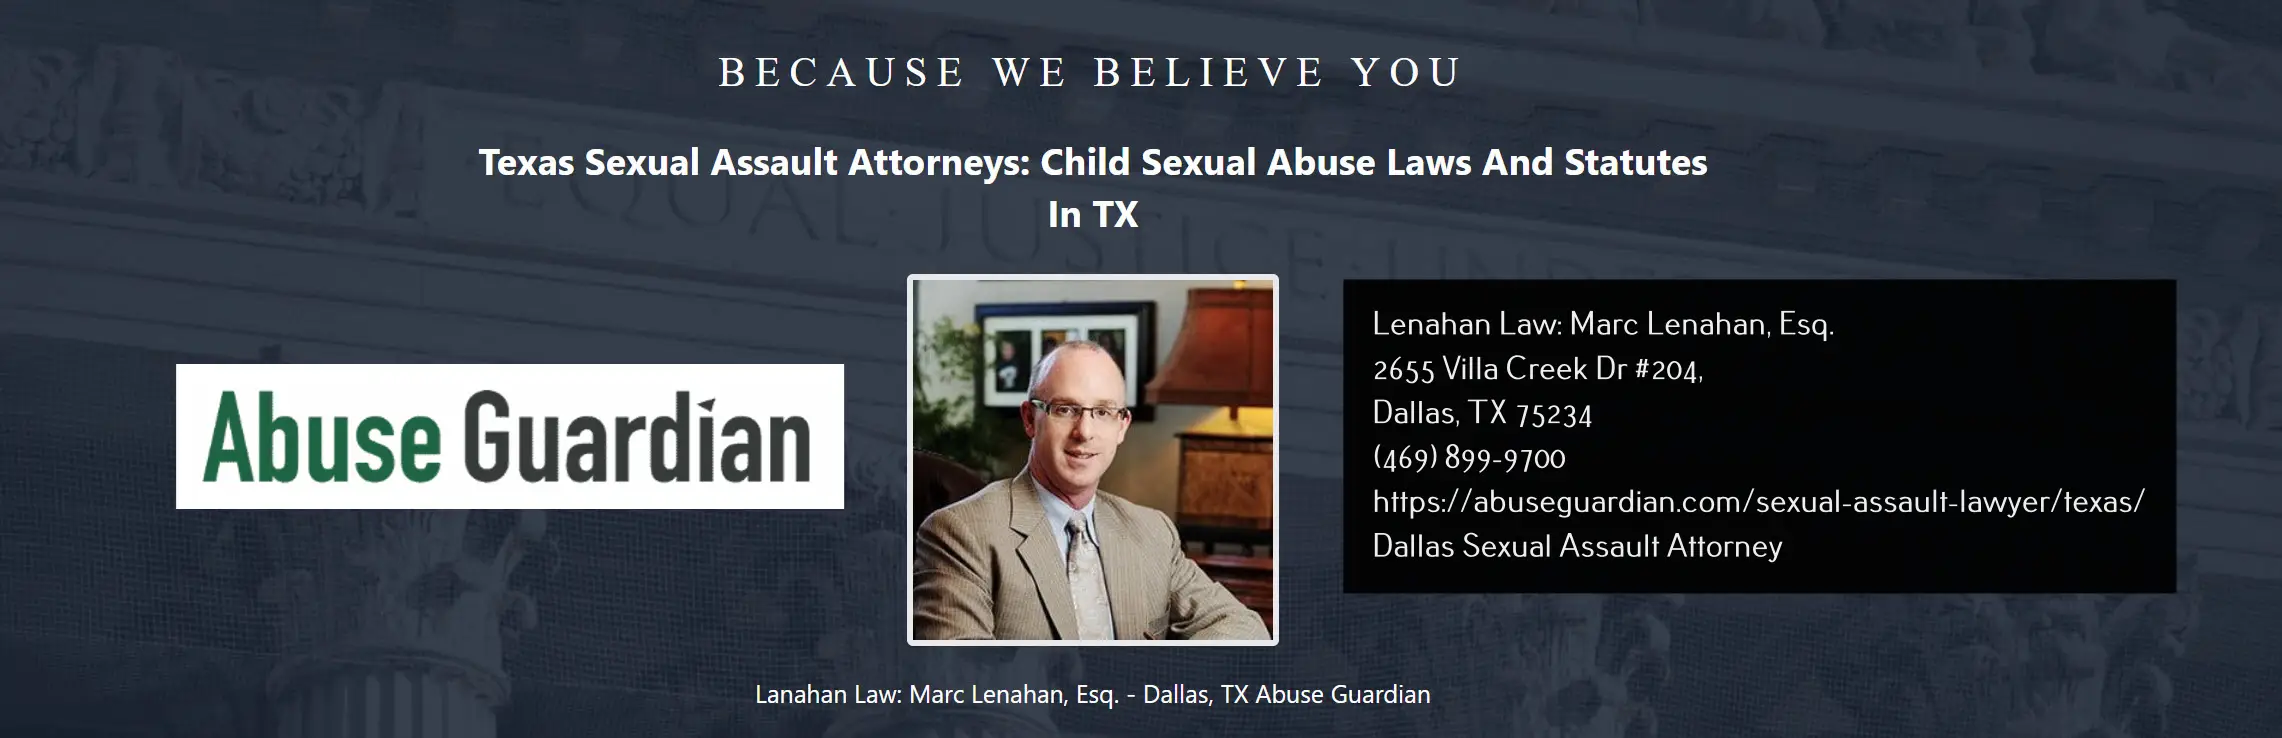 sexual assault attorney dallas lenahan law: marc lenahan, esq.